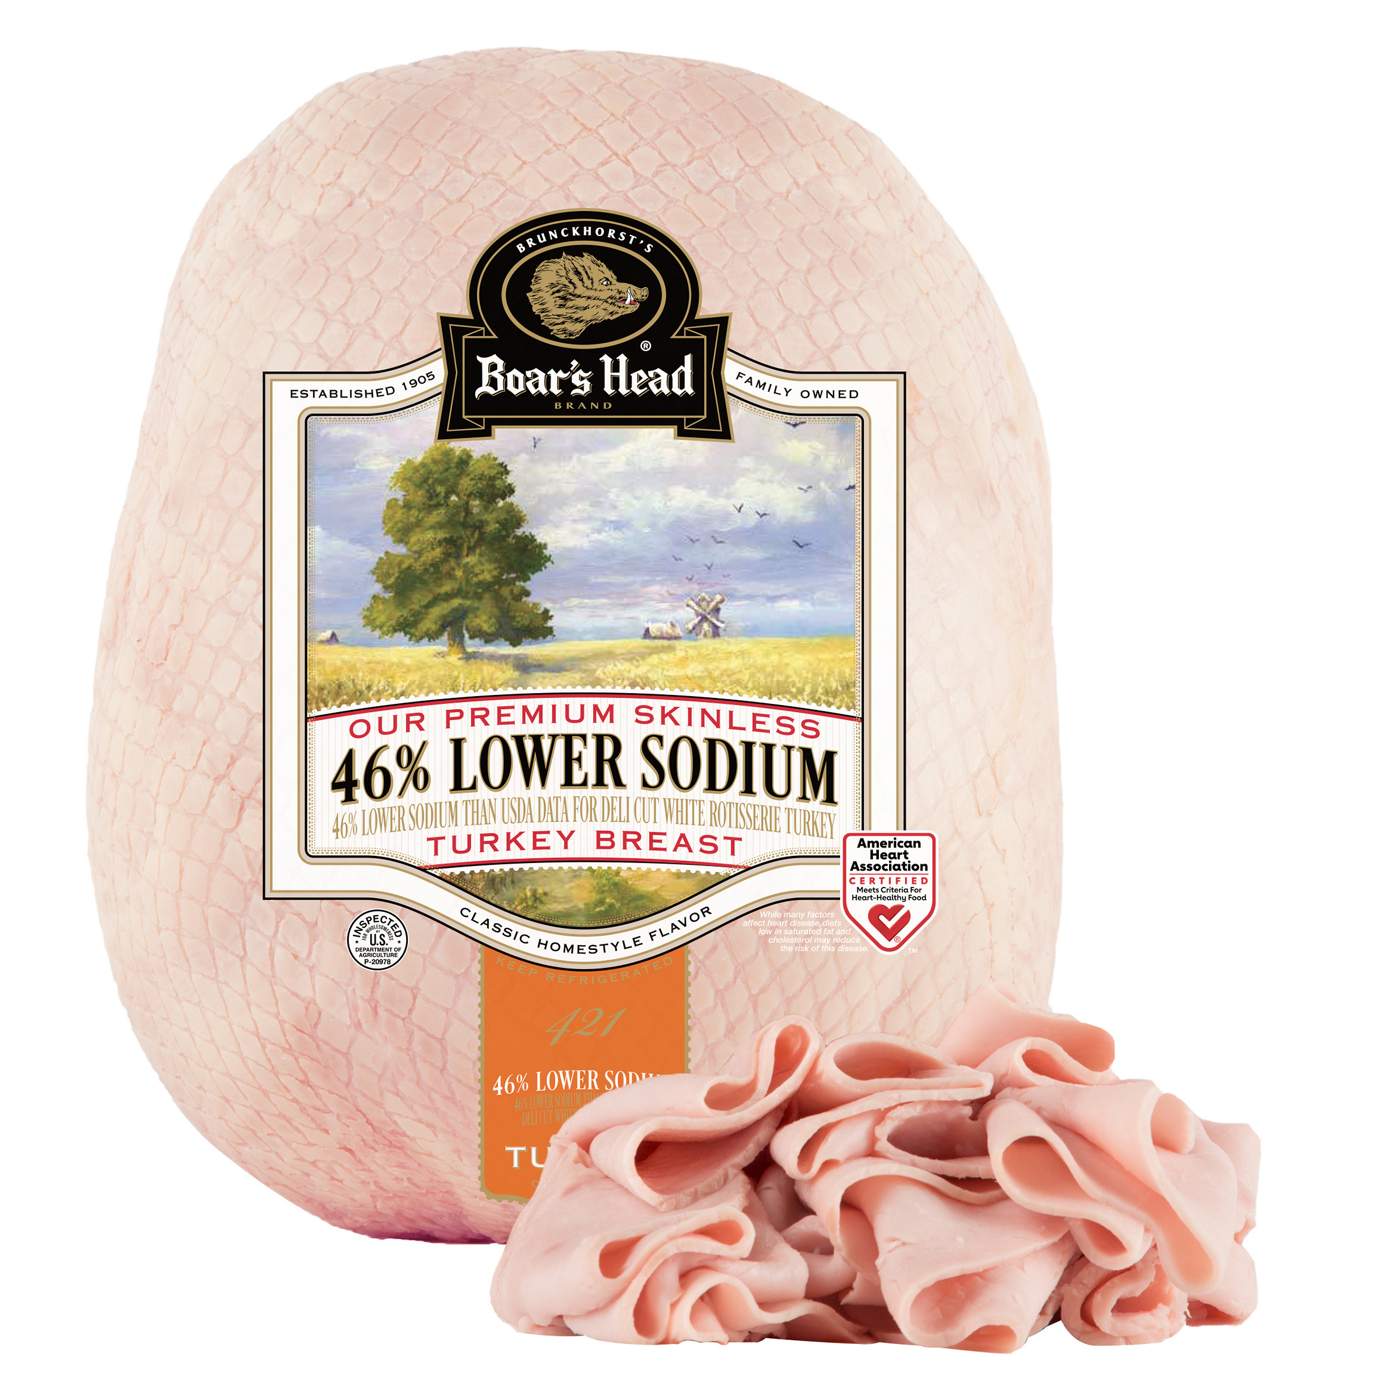 Boar's Head 46% Lower Sodium Turkey Breast; image 2 of 2